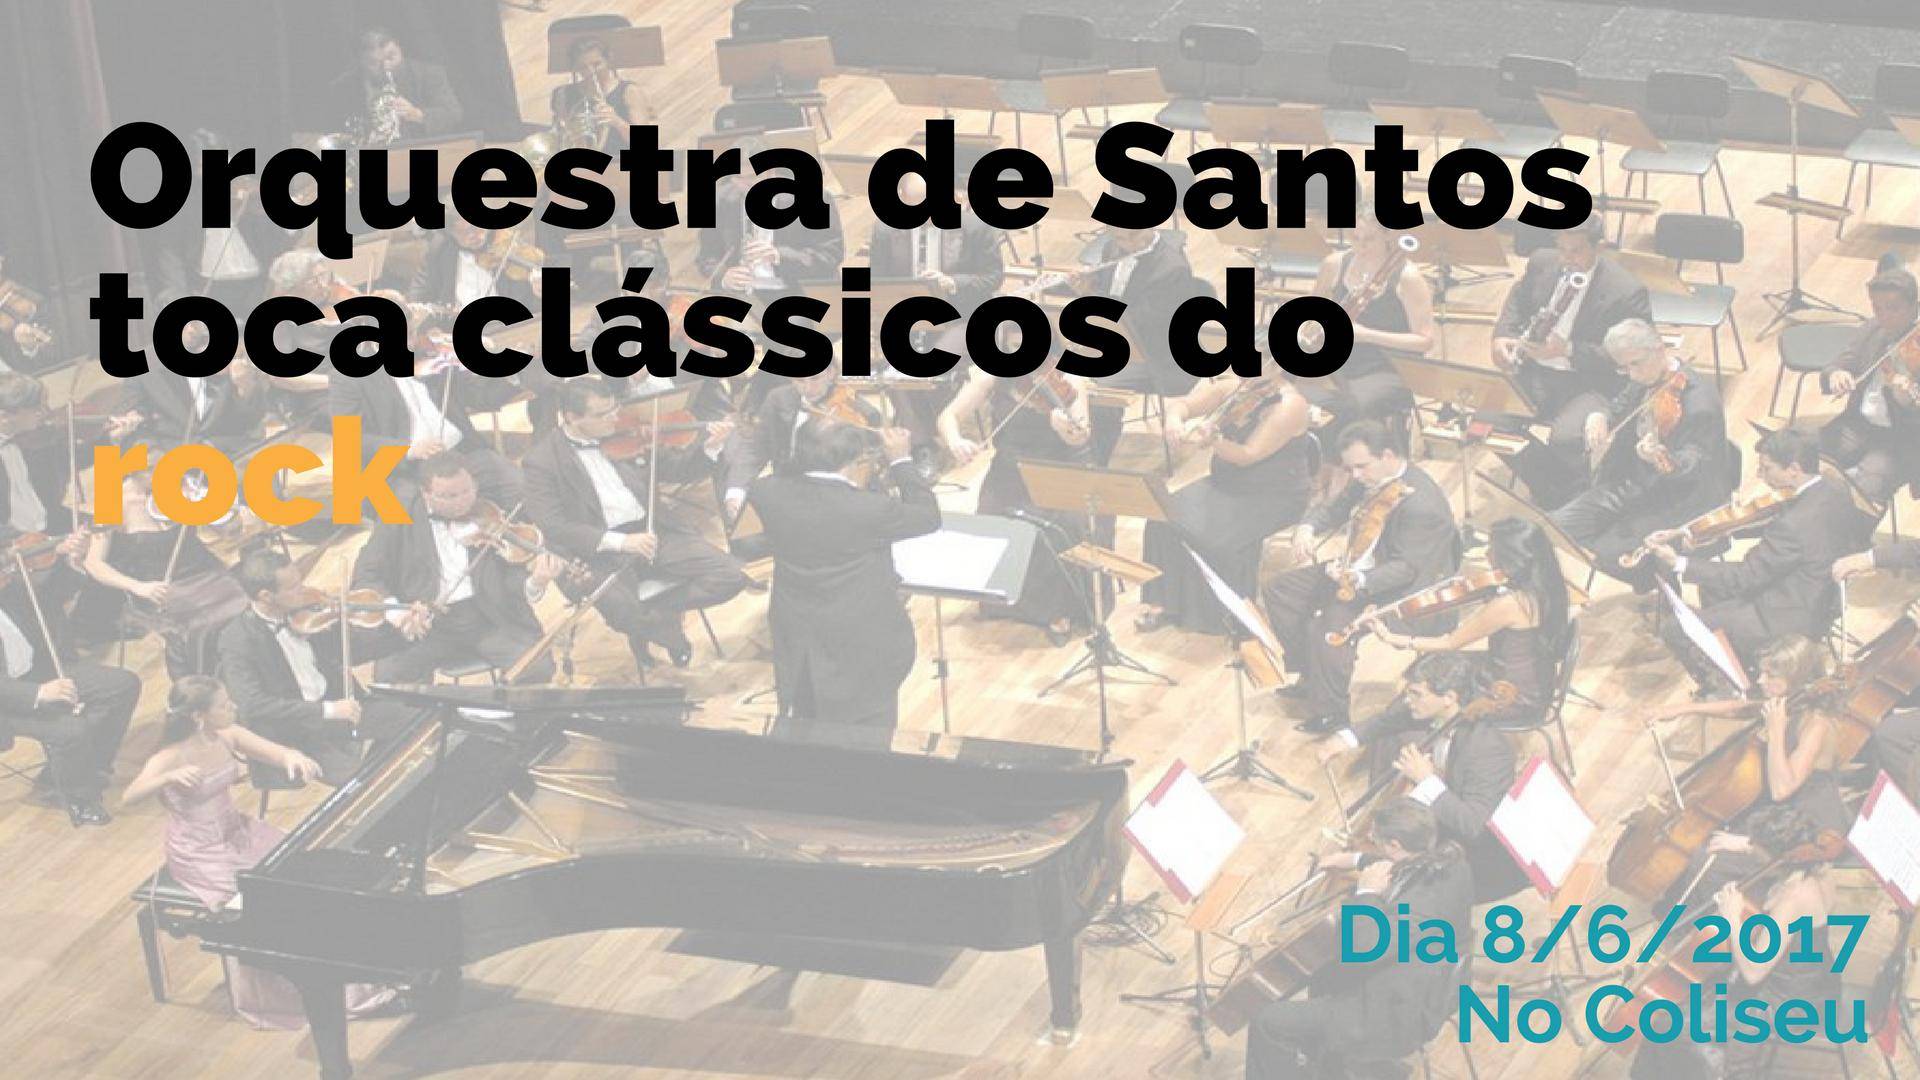 www.juicysantos.com.br - orquestra de santos toca clássicos do rock no coliseu